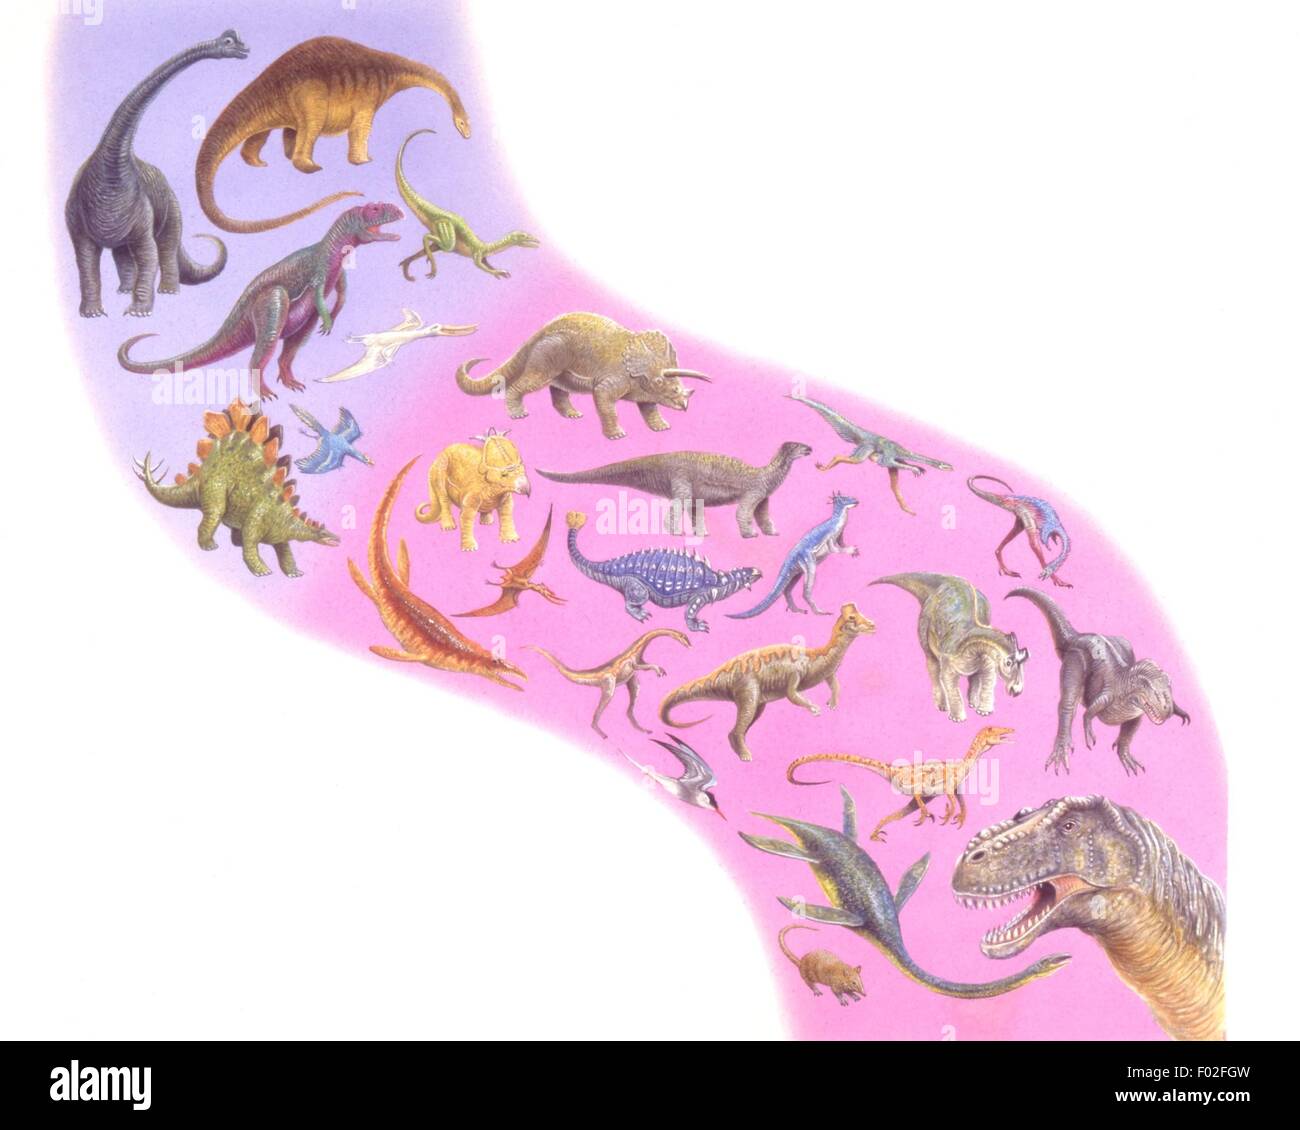 Palaeozoology - Mesozoic period - Dinosaurs - Art work by Steve Roberts Stock Photo